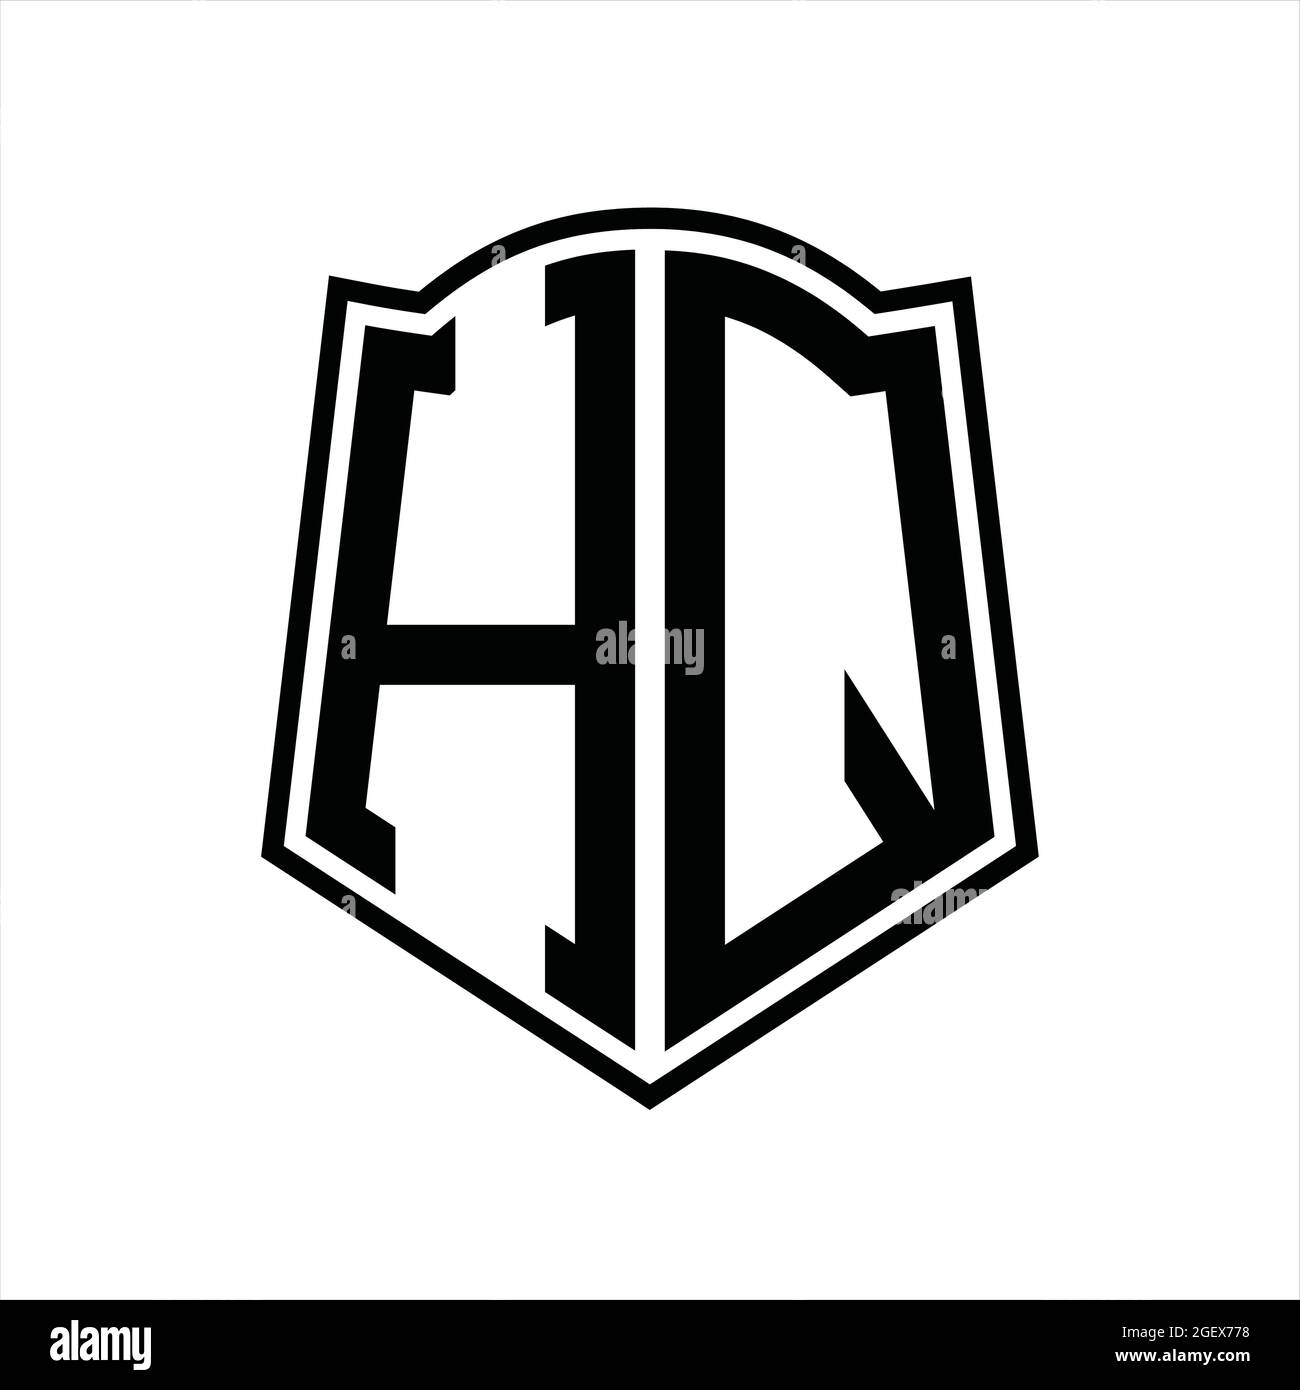 HQ Logo monogram with shield shape isolated black background design ...